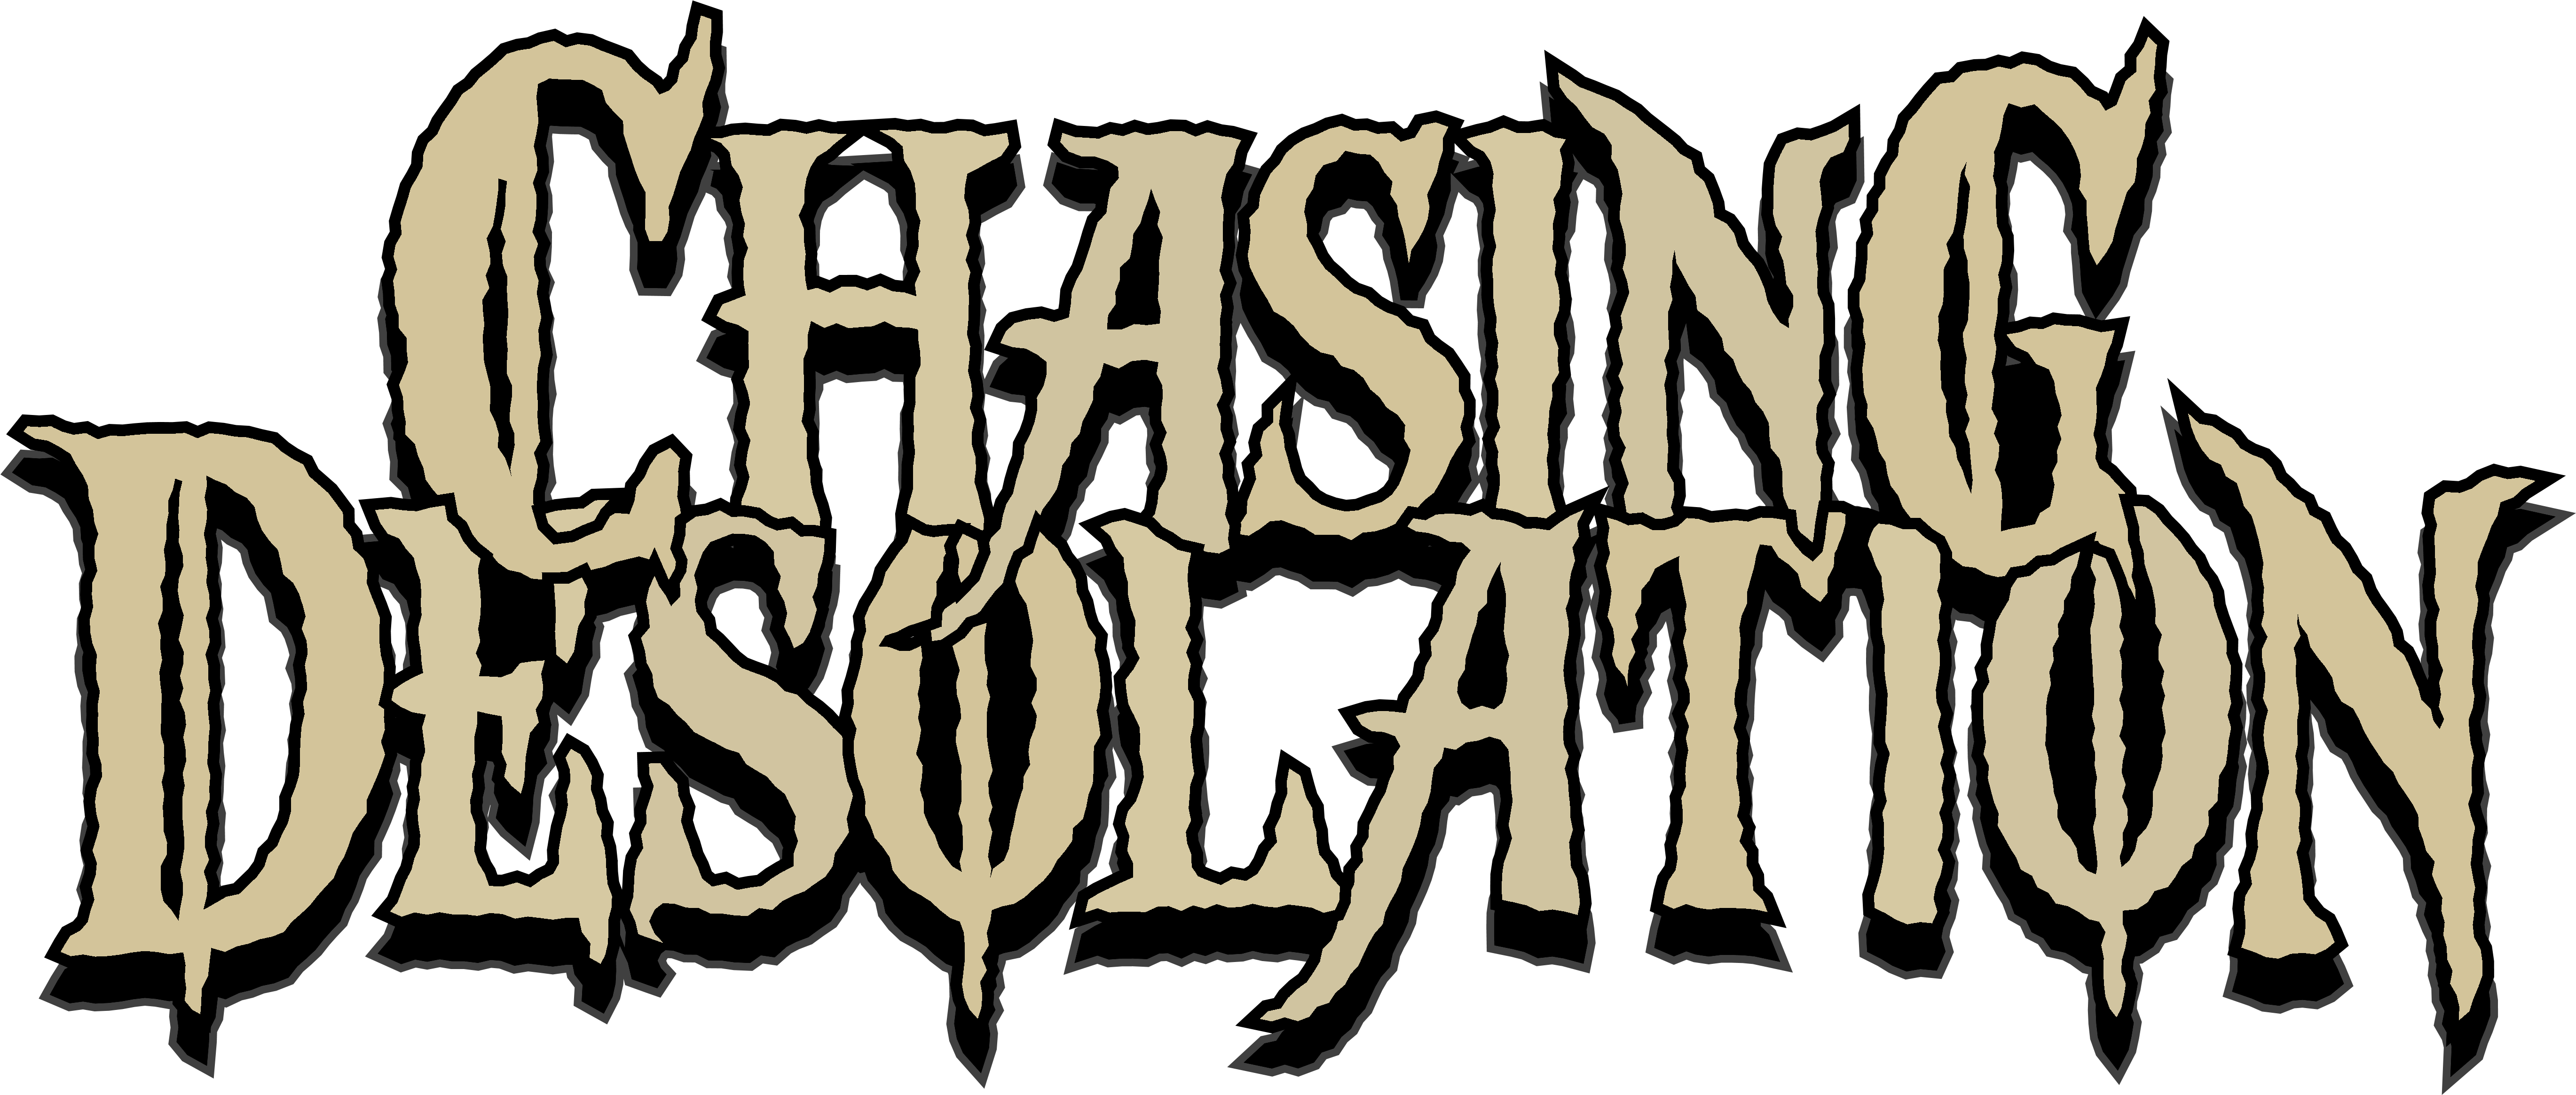 Chasing Desolation